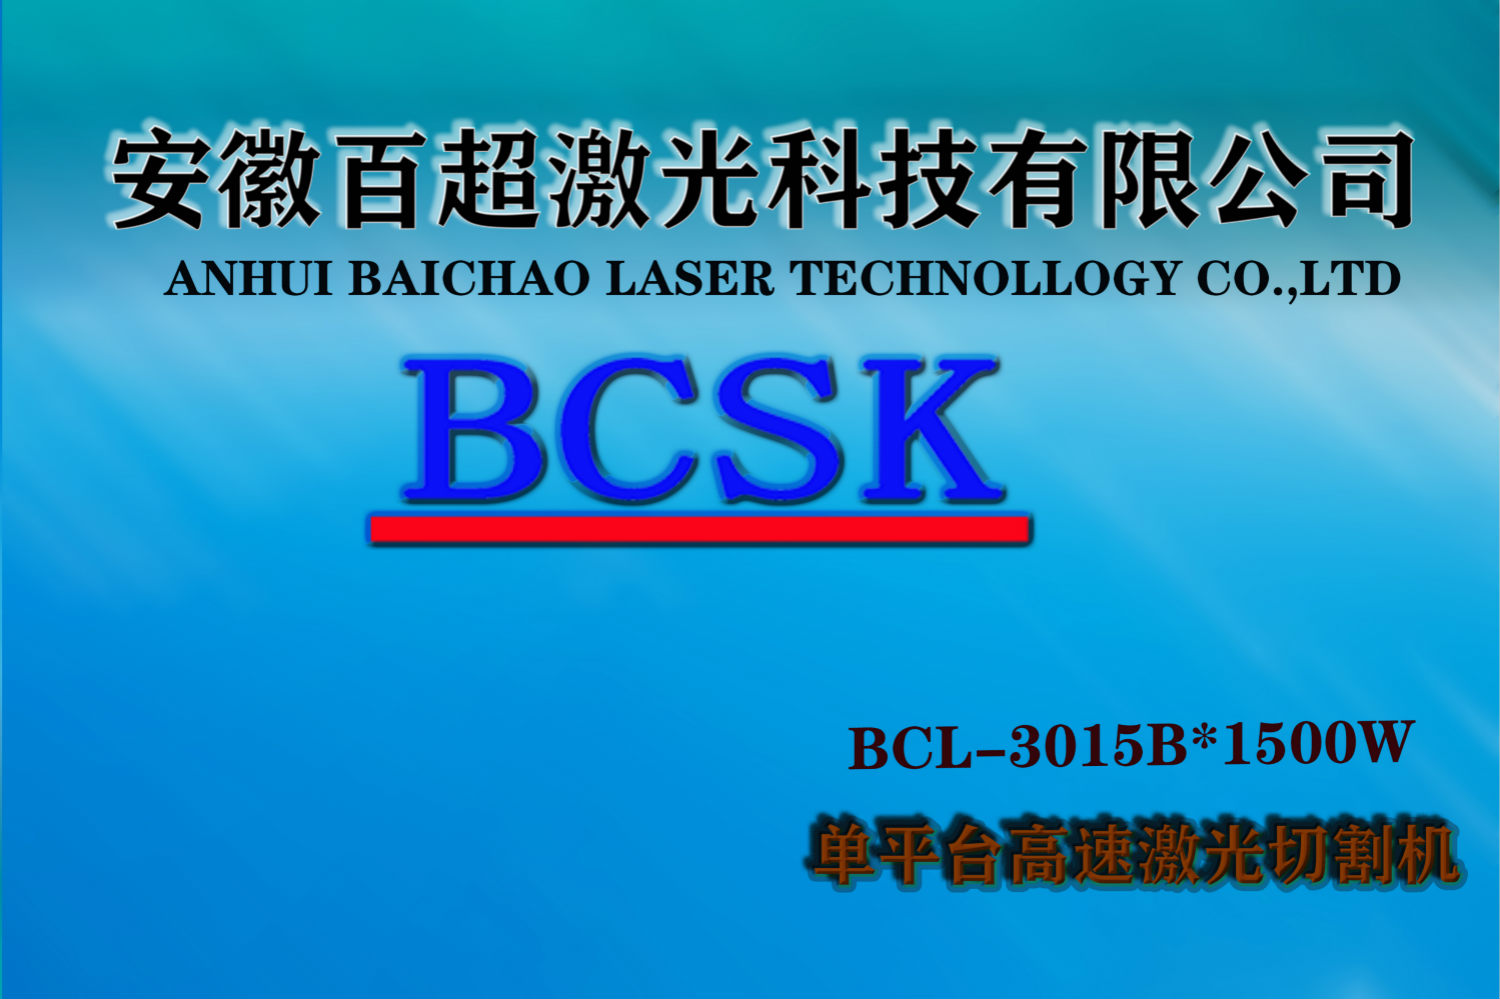 BCL-3015B    Single platform high speed fiber cutting machine